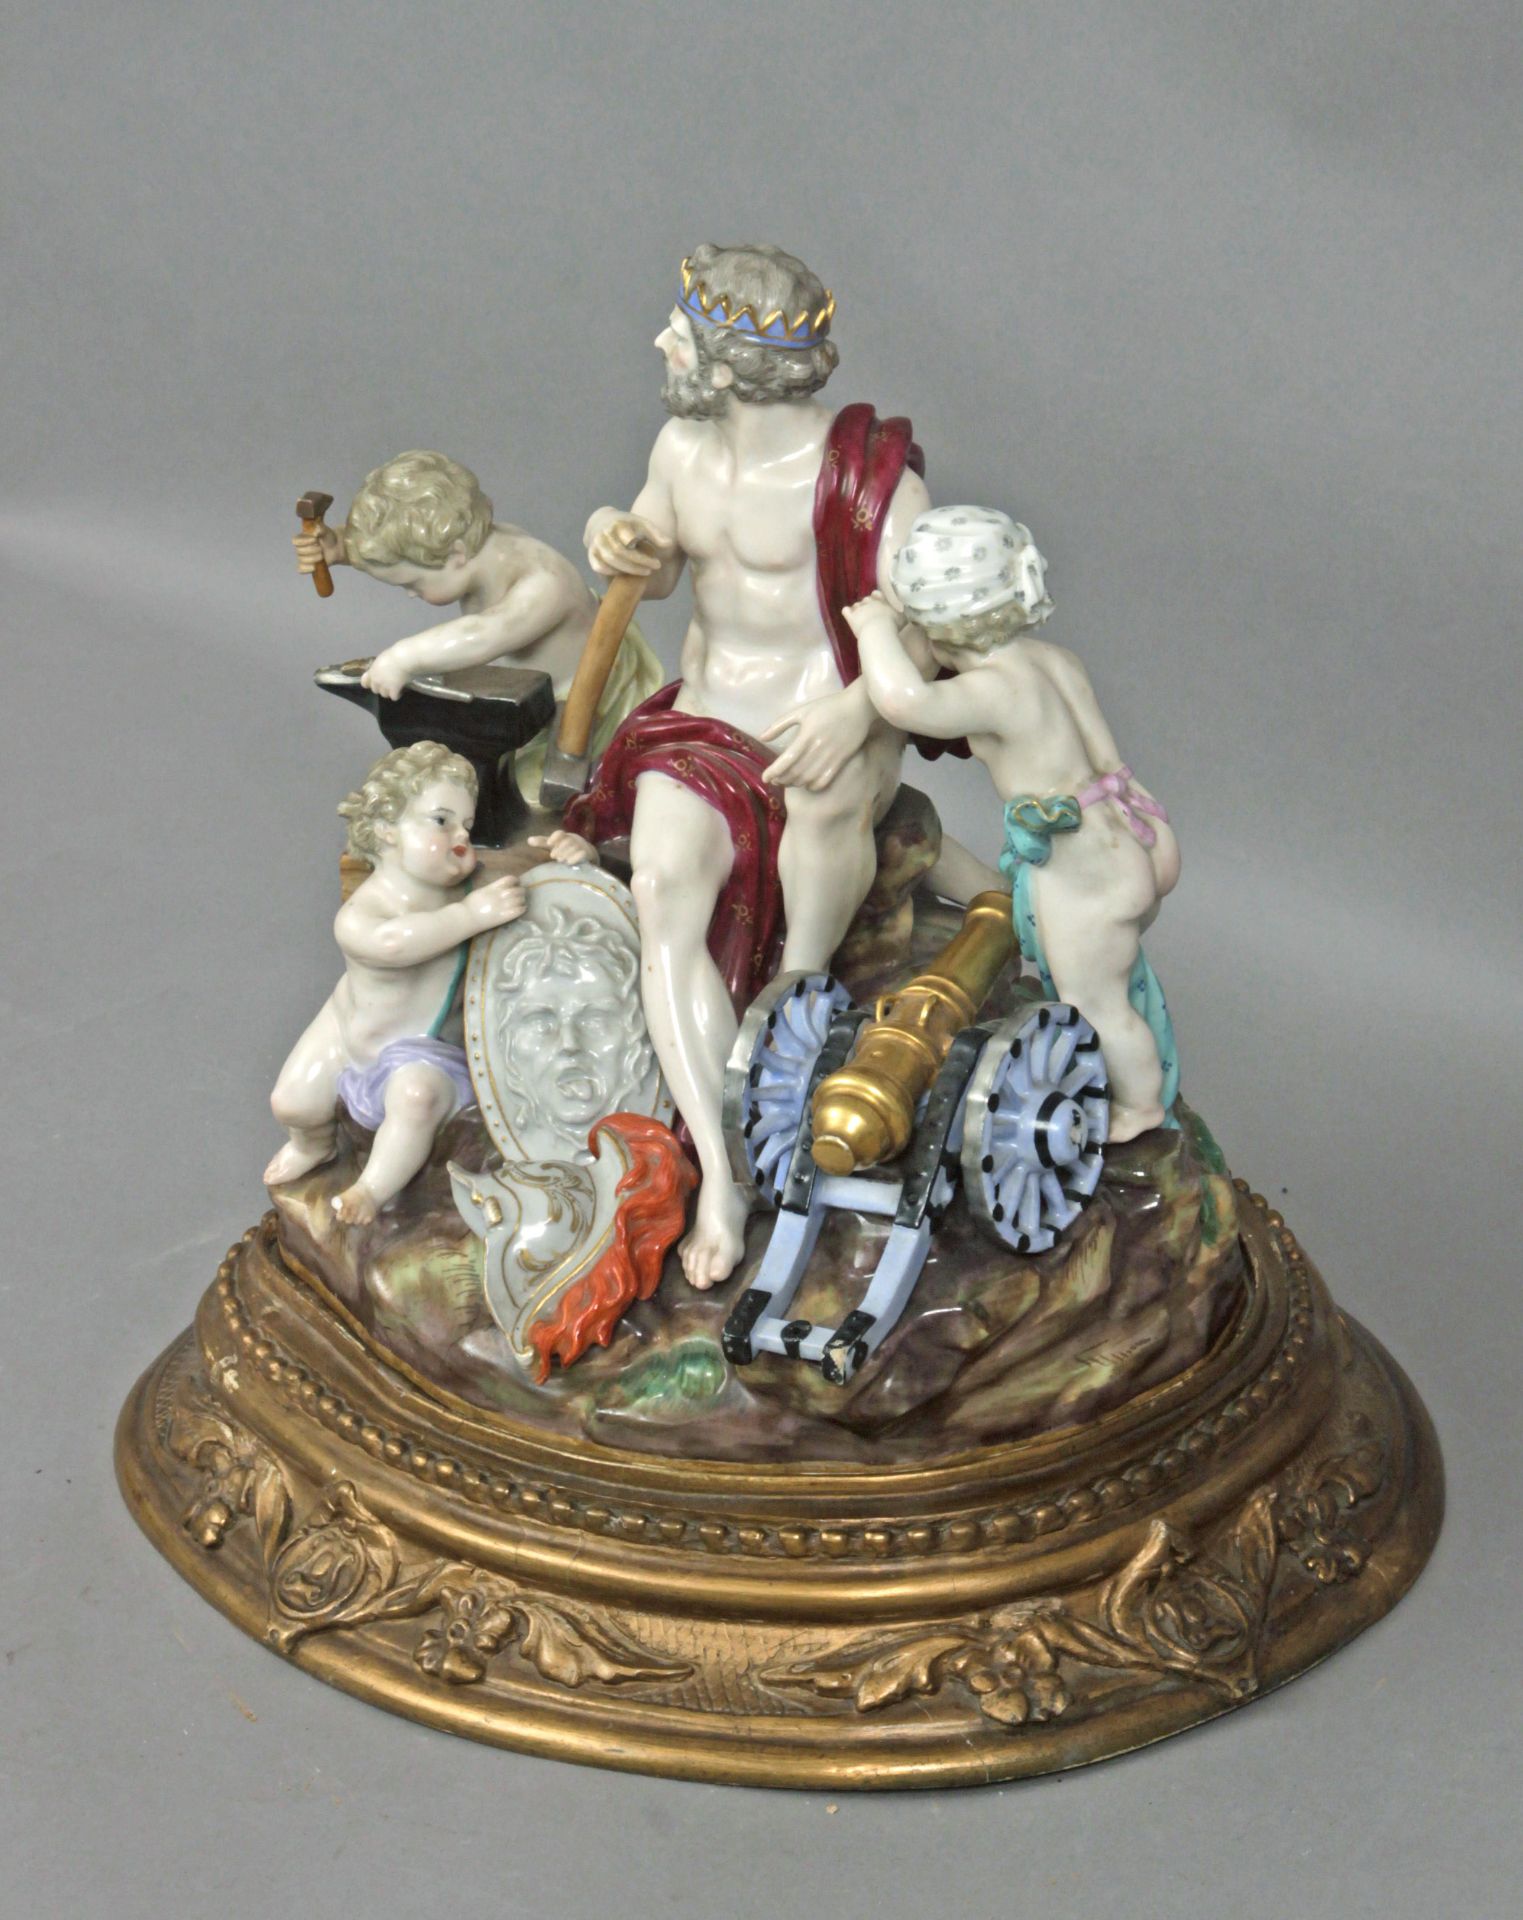 A 19th century mythological scene in Meissen porcelain - Image 3 of 6